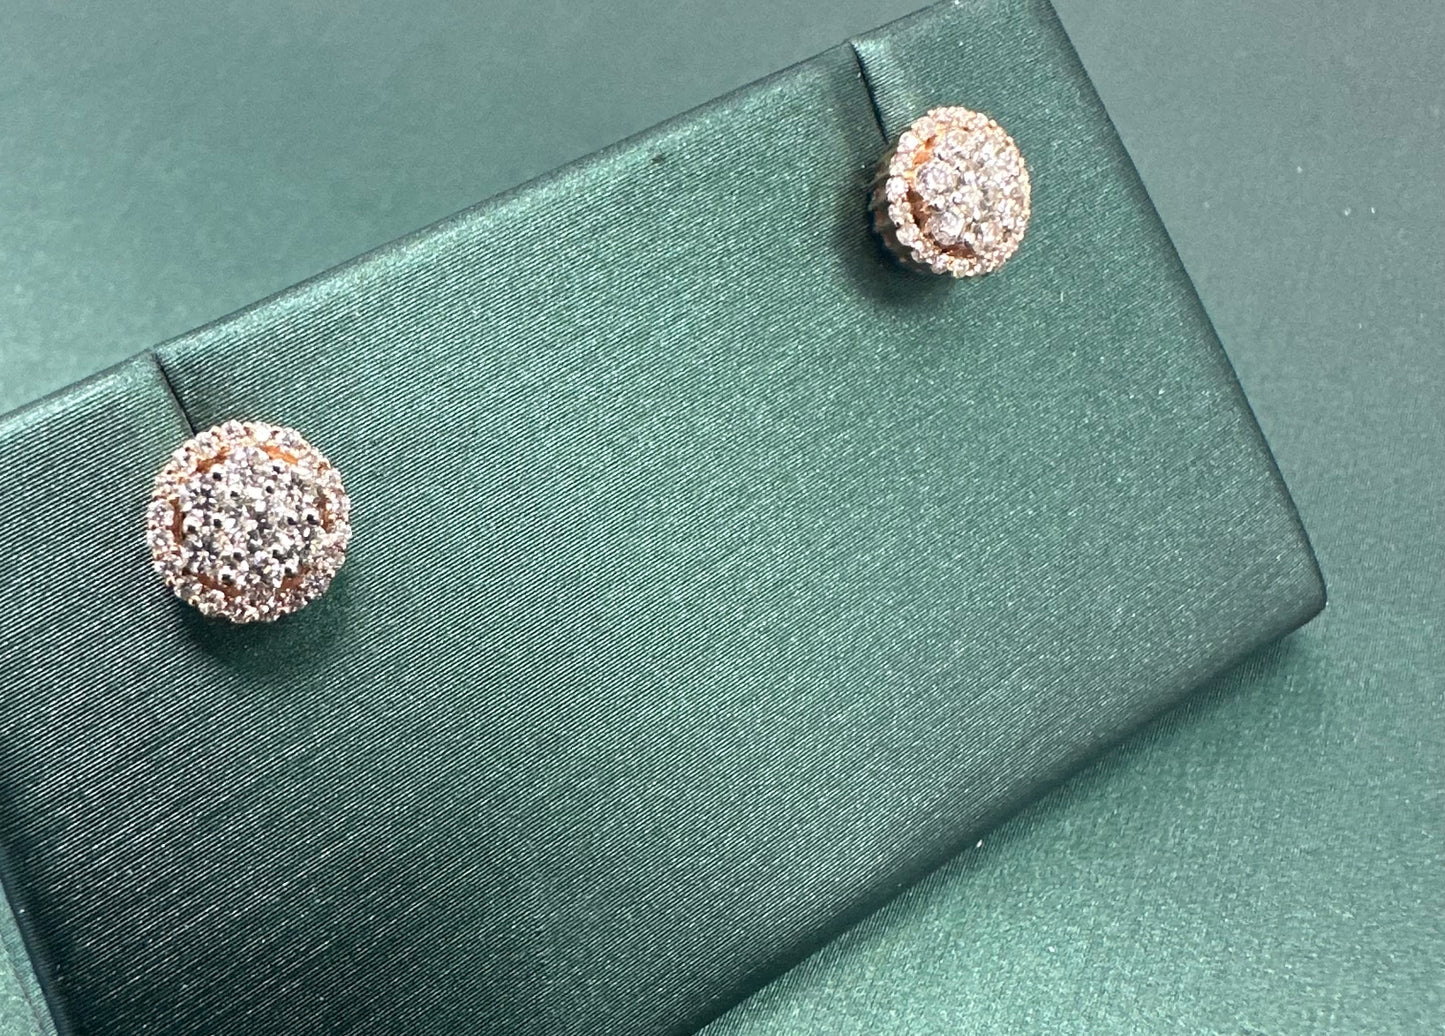 Diamond cluster halo earrings 1.14 ct